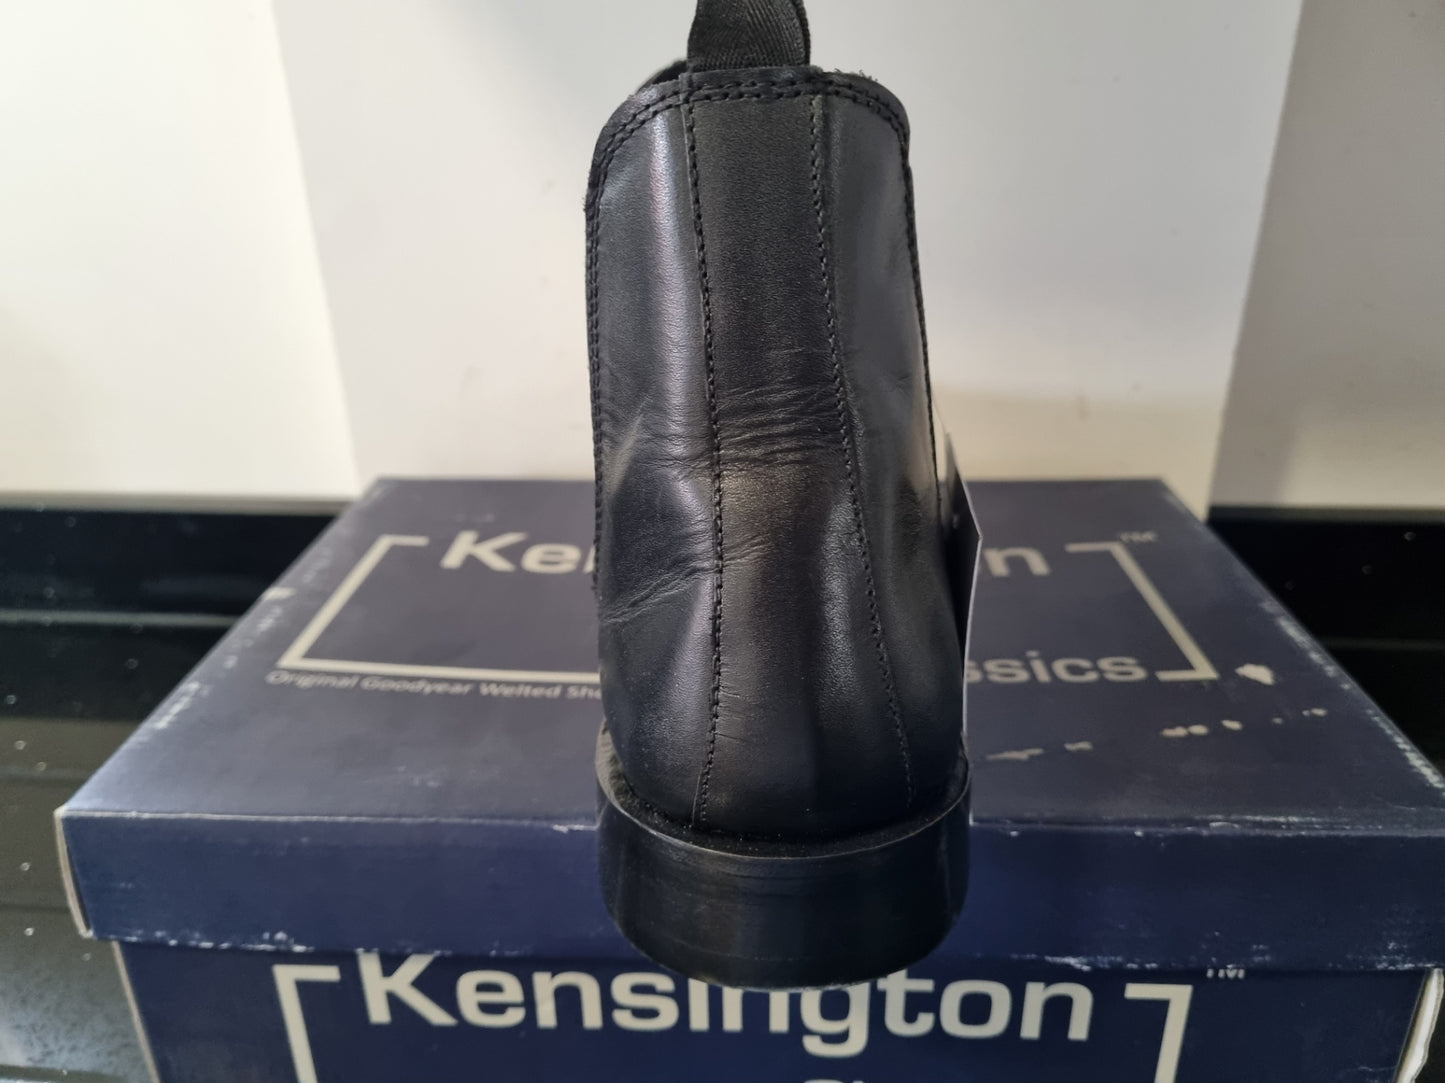 Kensington American Classic Chelsea Boot - Black Calf Leather